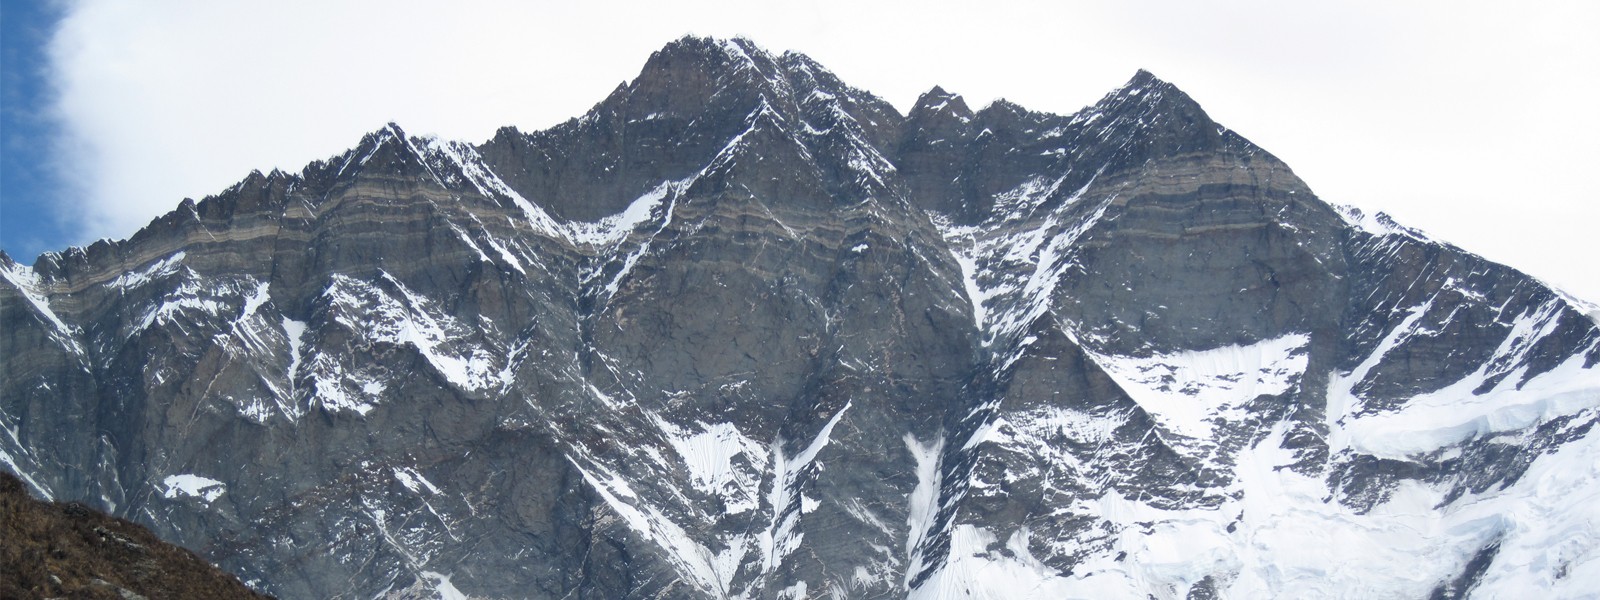 Lhotse Shar Expedition